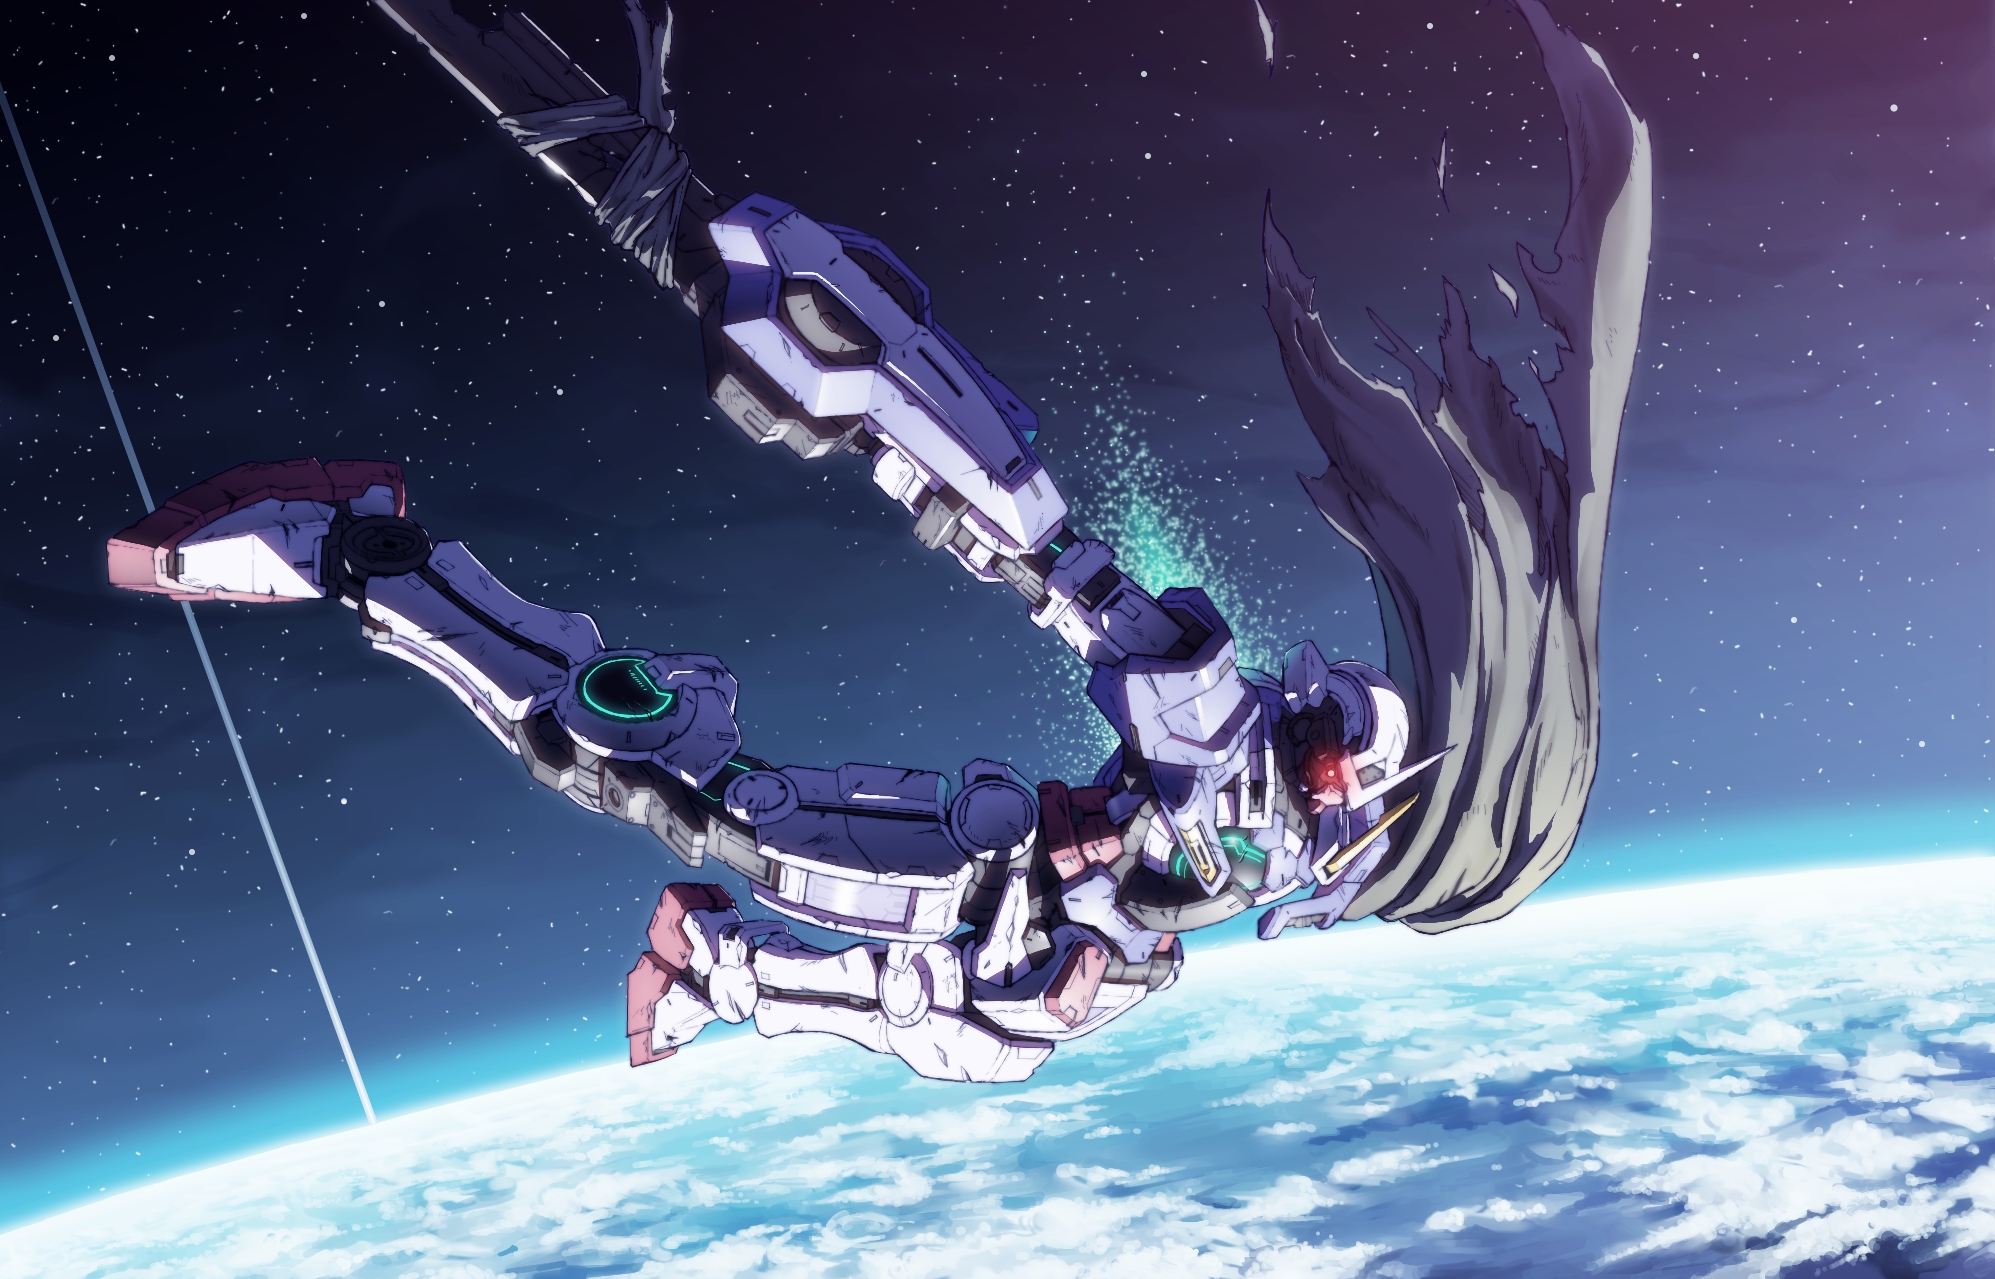 Mobile Suit Gundam Mecha Wallpaper Background